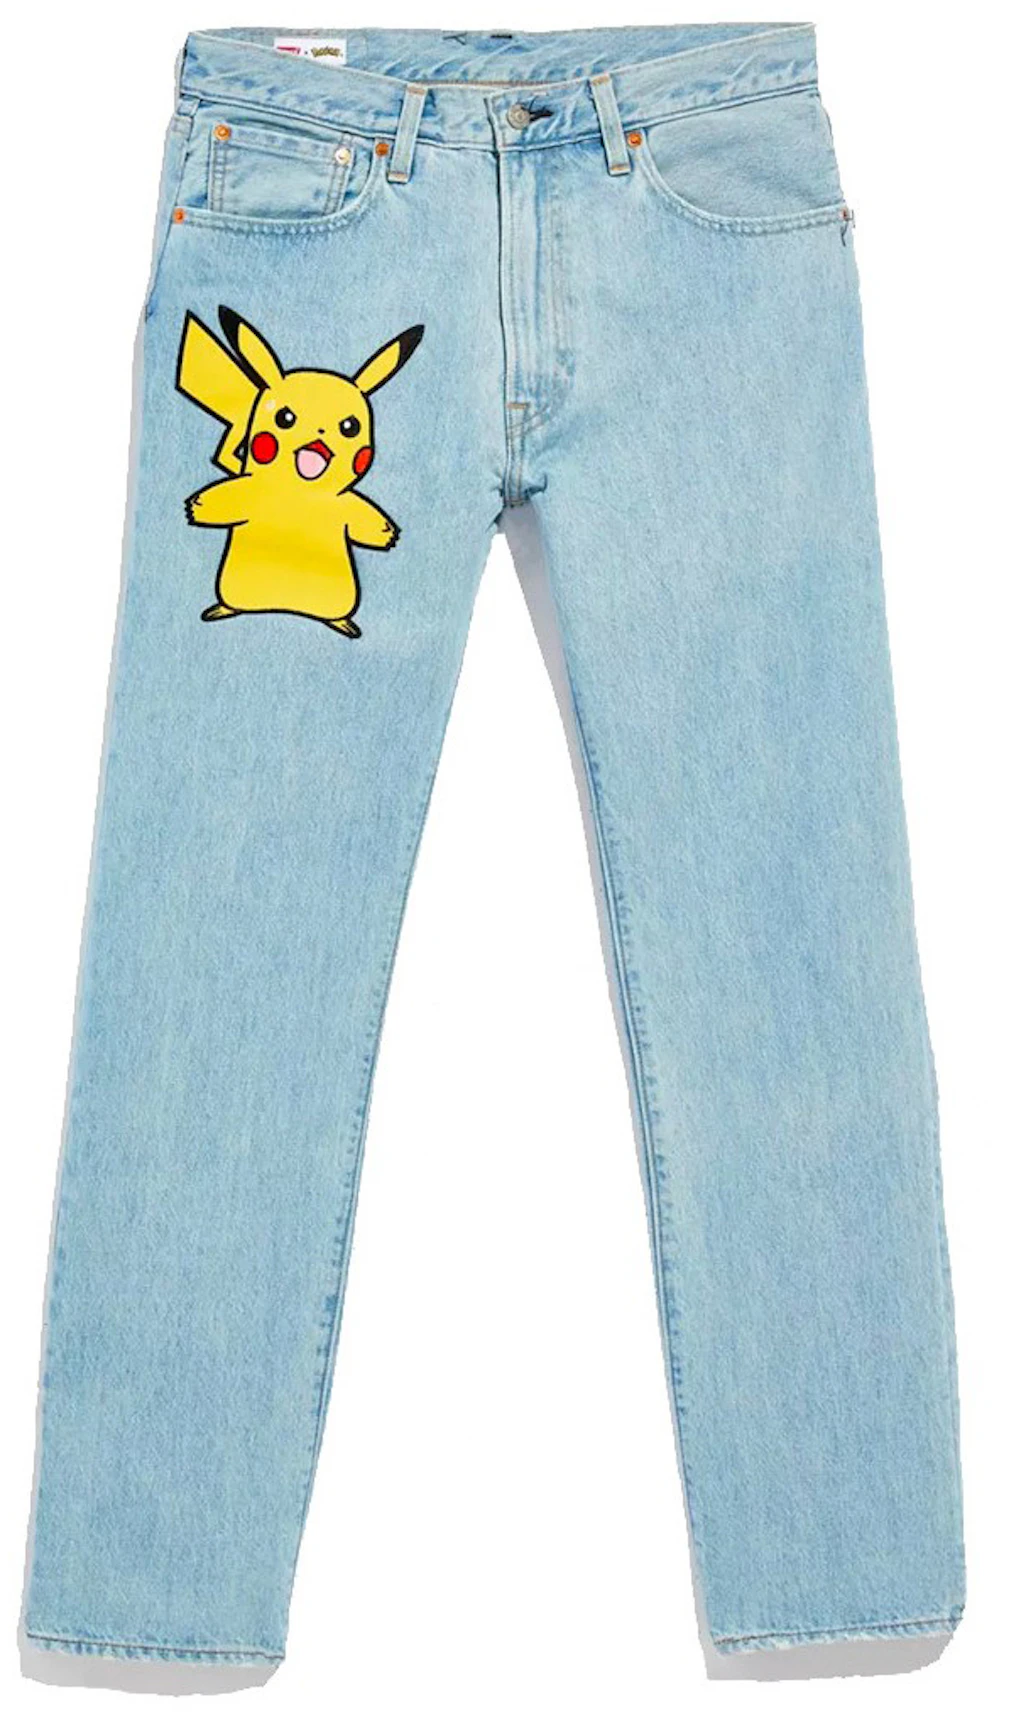 Introducir 63+ imagen levi’s pokemon jeans